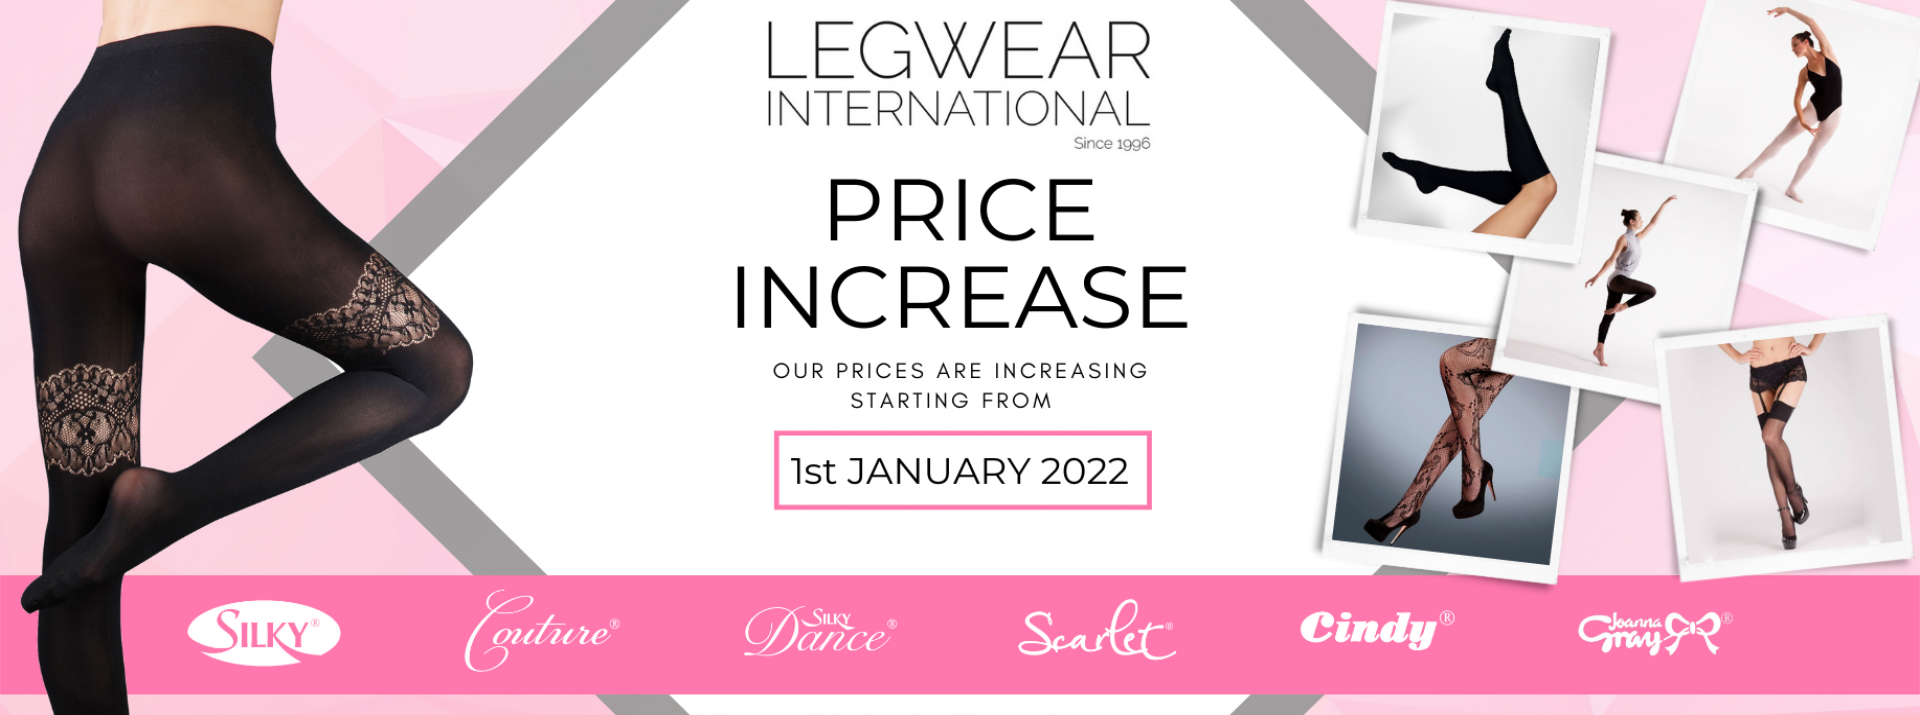 Legwear International Price Increase